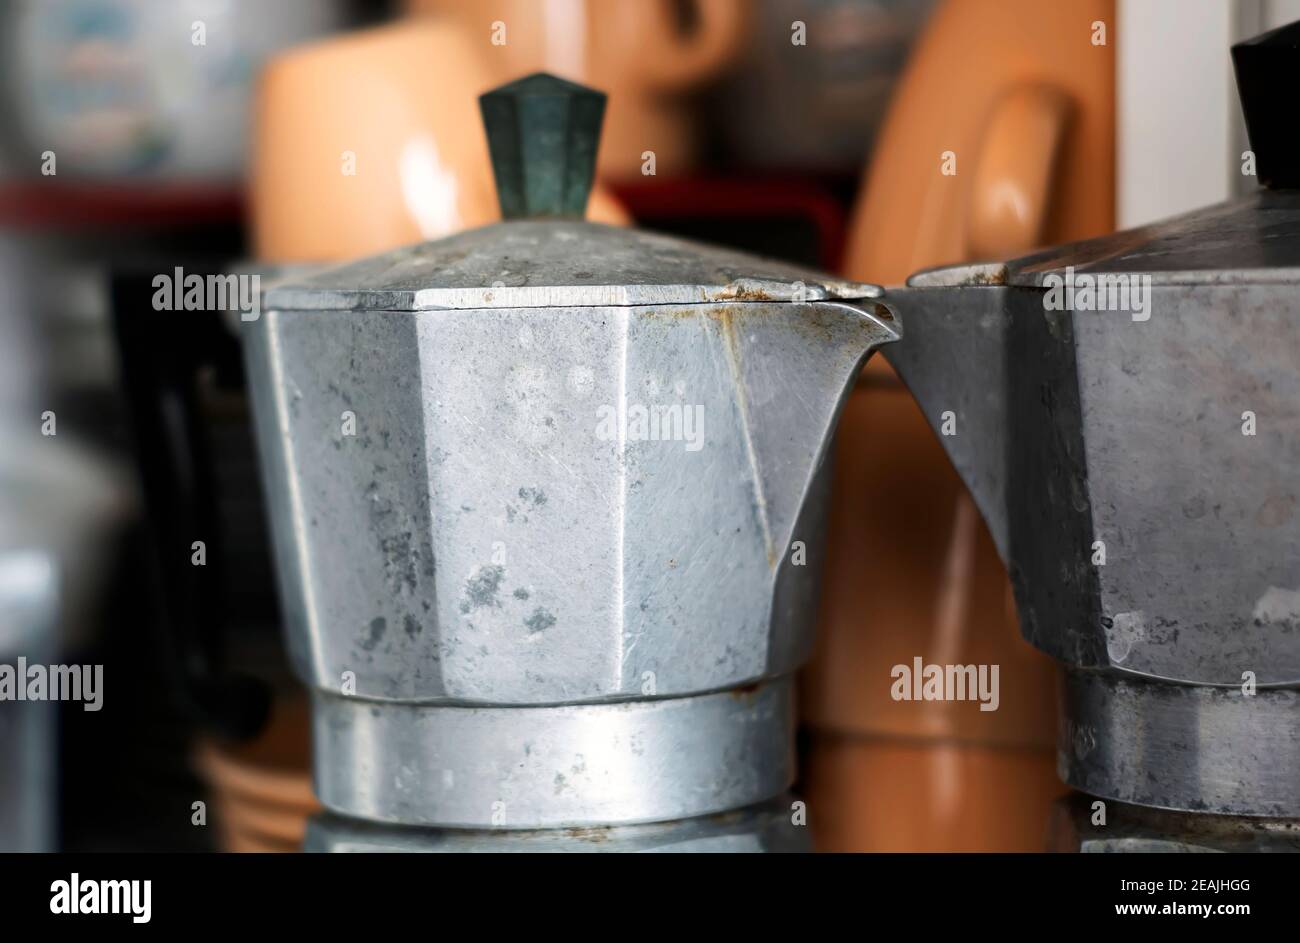 https://c8.alamy.com/comp/2EAJHGG/close-up-view-of-an-old-coffee-pot-inside-a-pantry-2EAJHGG.jpg